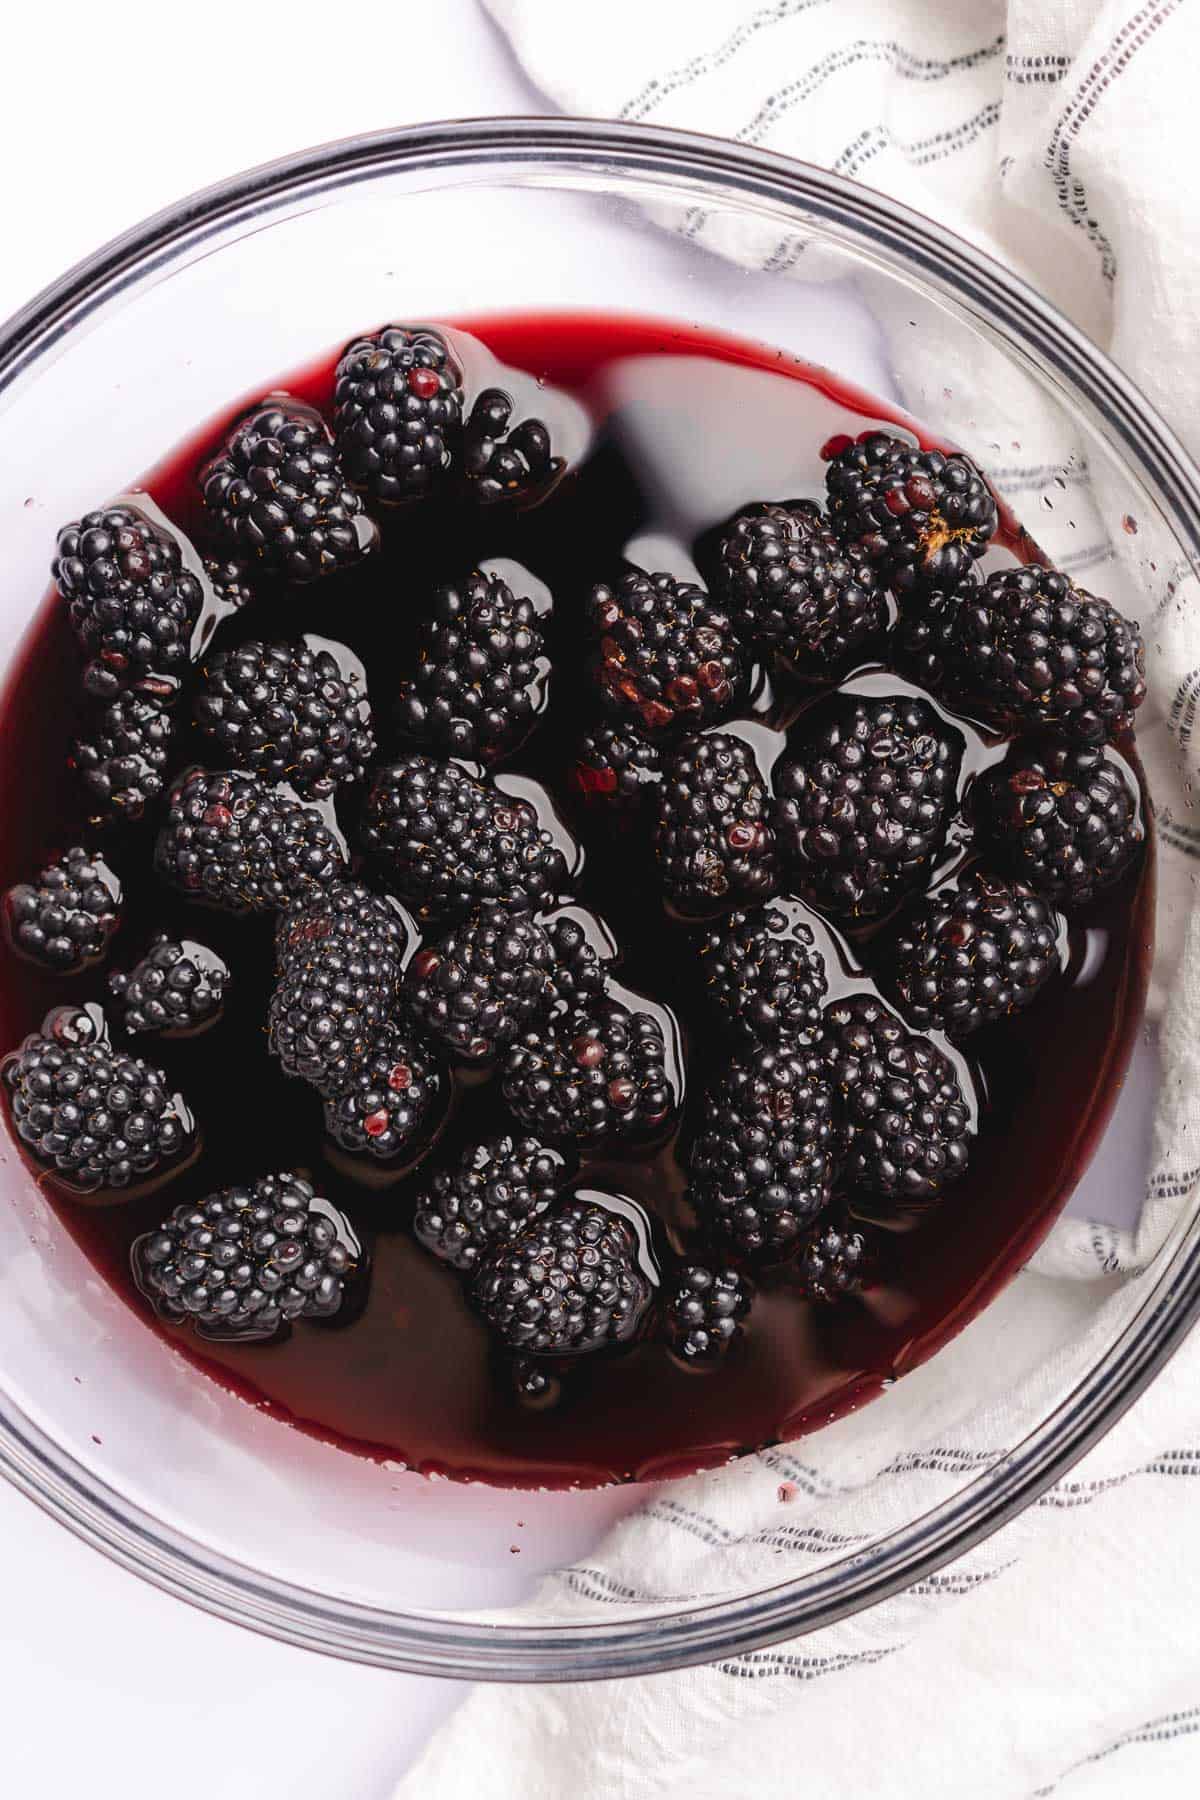 blackberries in a bowl full of red wine